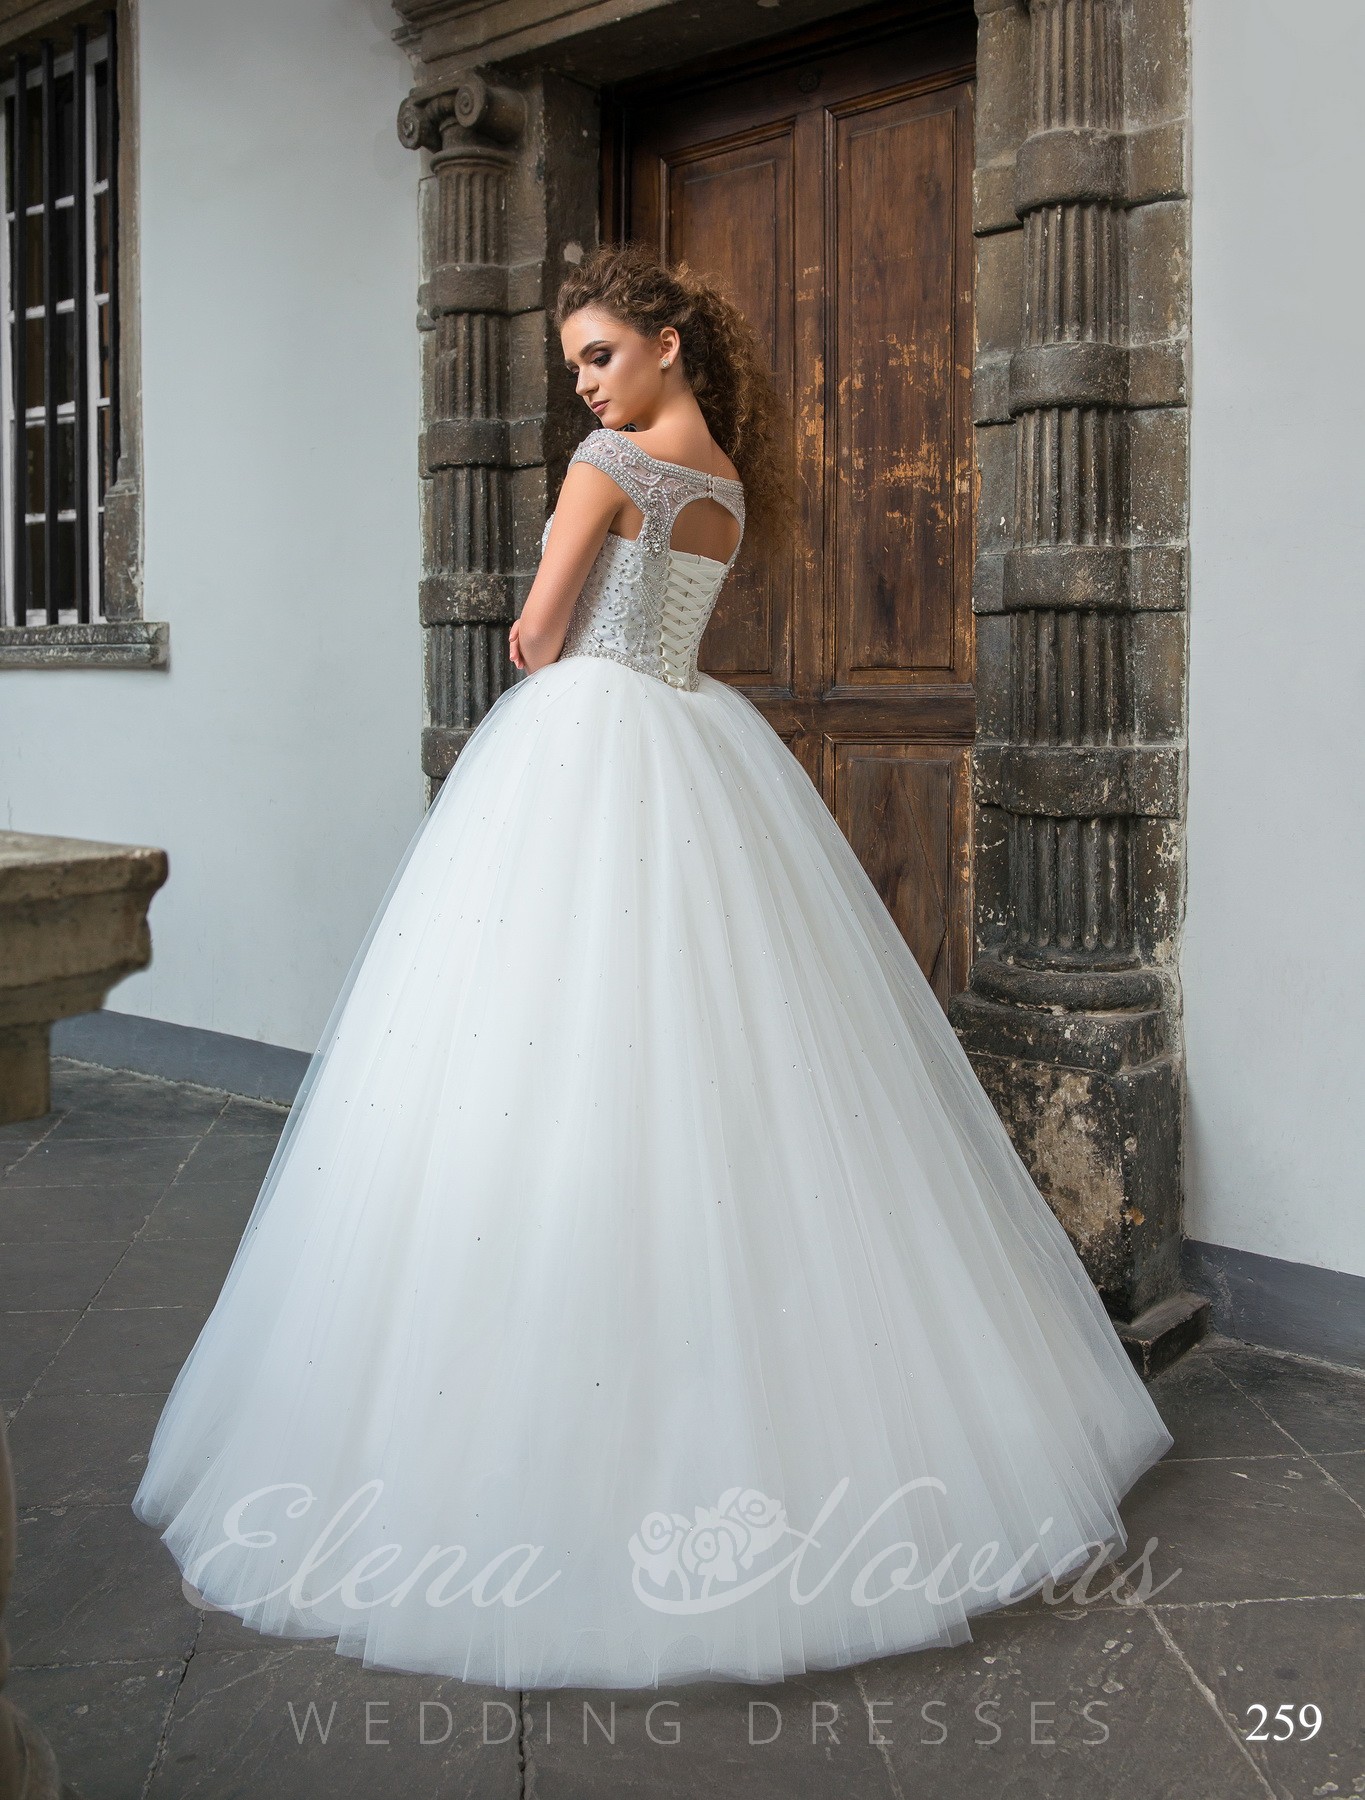 Wedding dress with a long skirt model 259